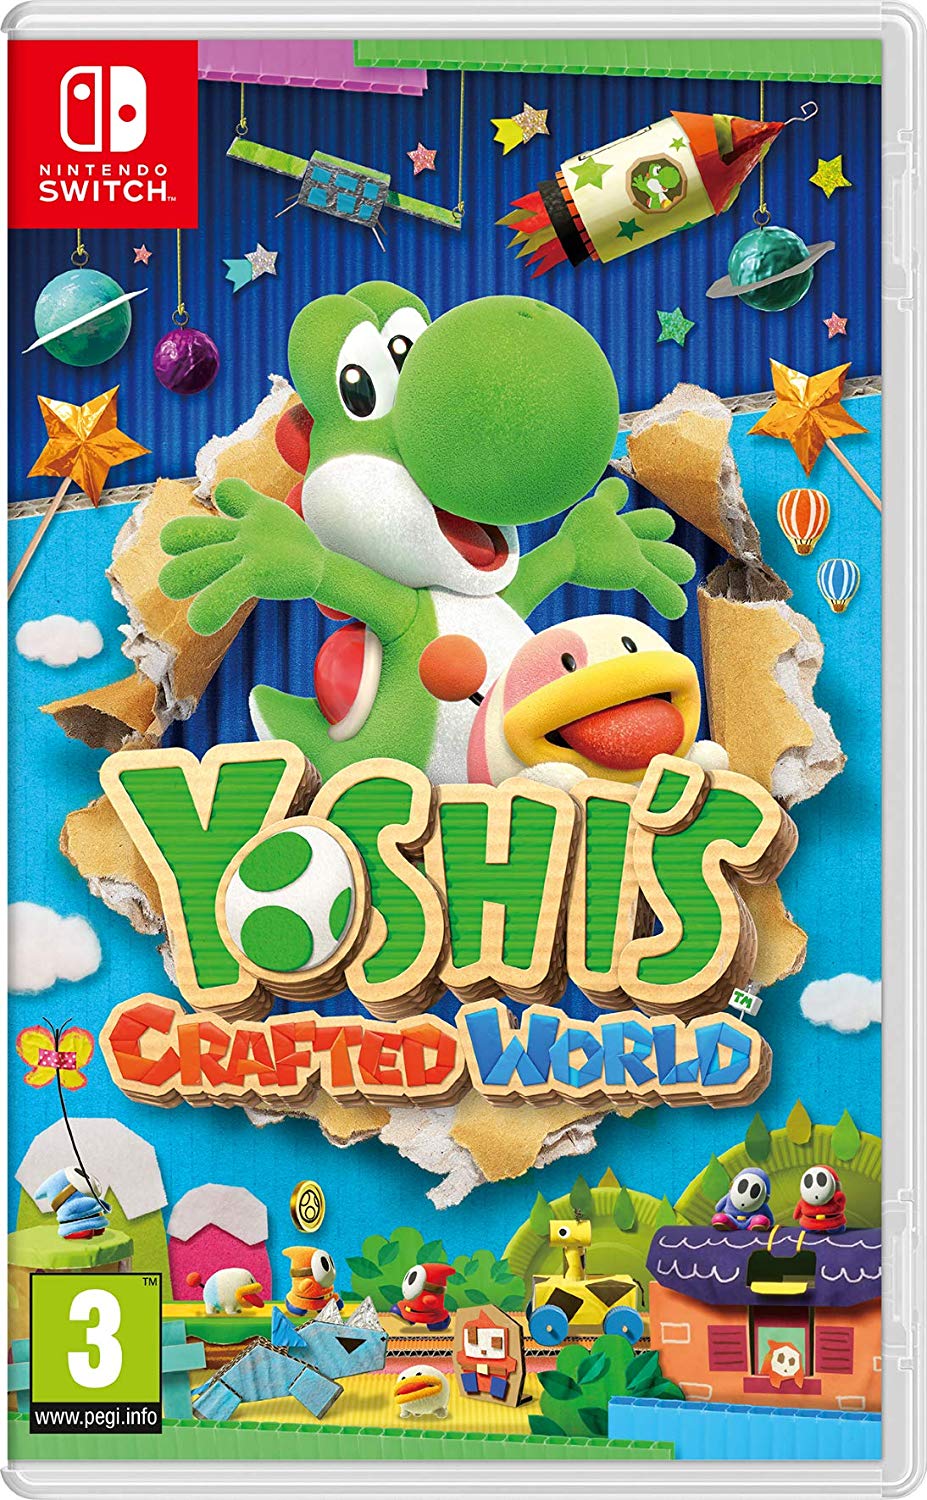 Yoshi's Crafted World Digital Download Key (Nintendo Switch)